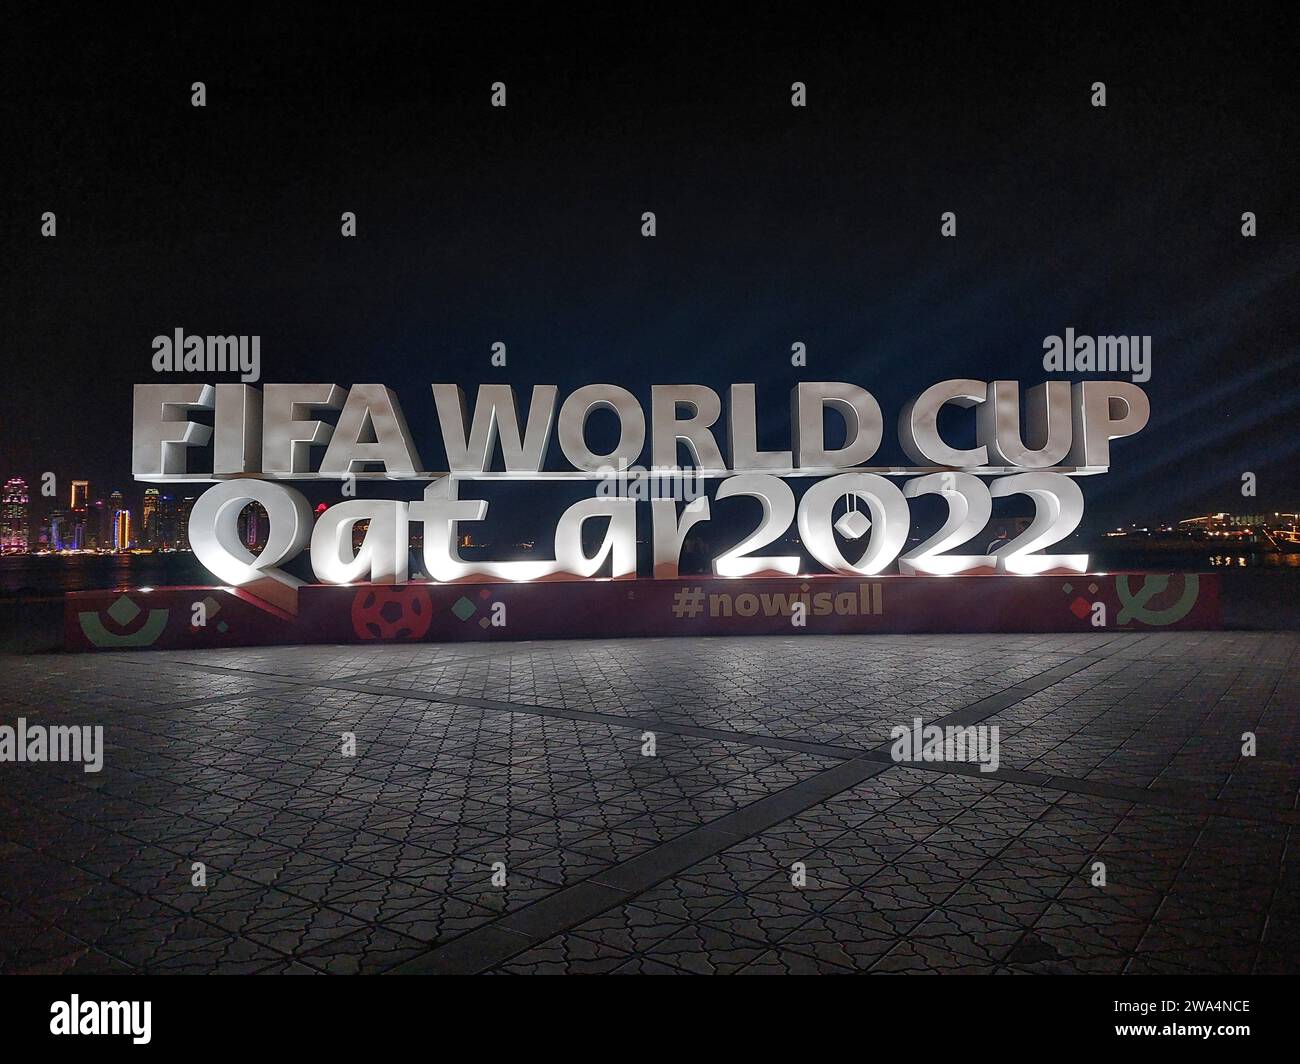 Fifa World Cup Qatar 2022 poster on Corniche, Doha Stock Photo